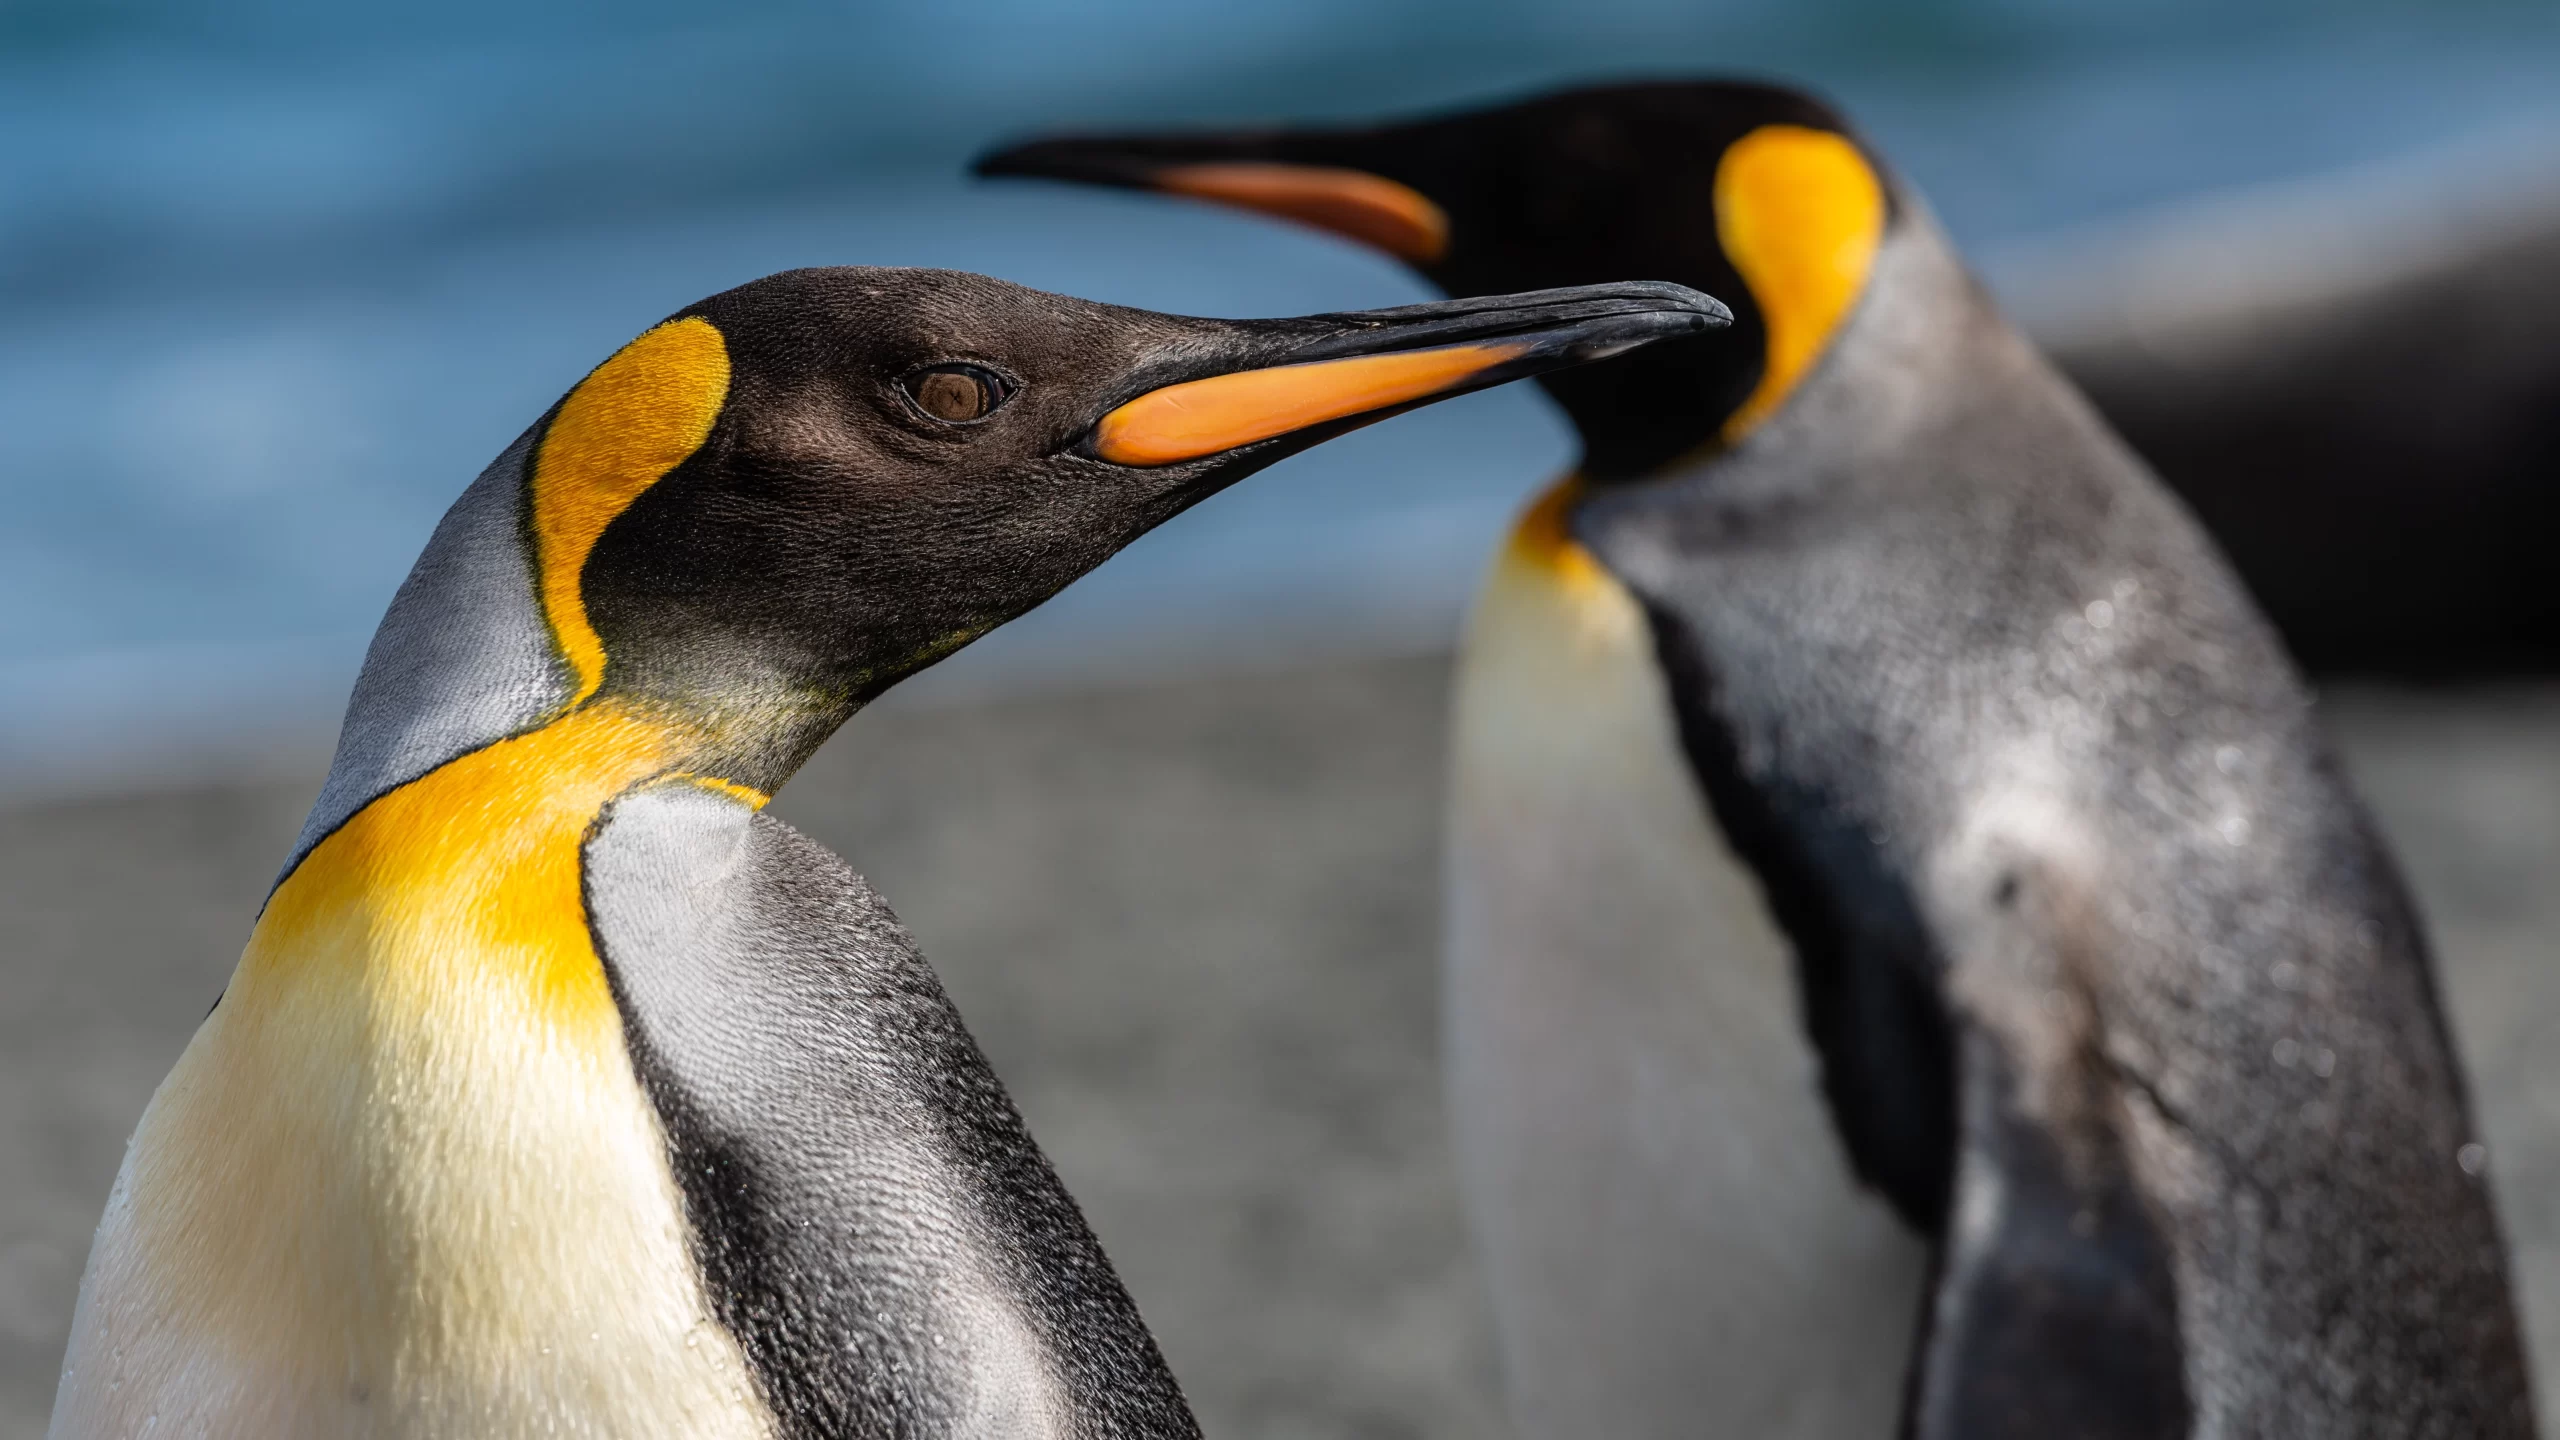 paul-carroll-Penguin beack to beak -unsplash